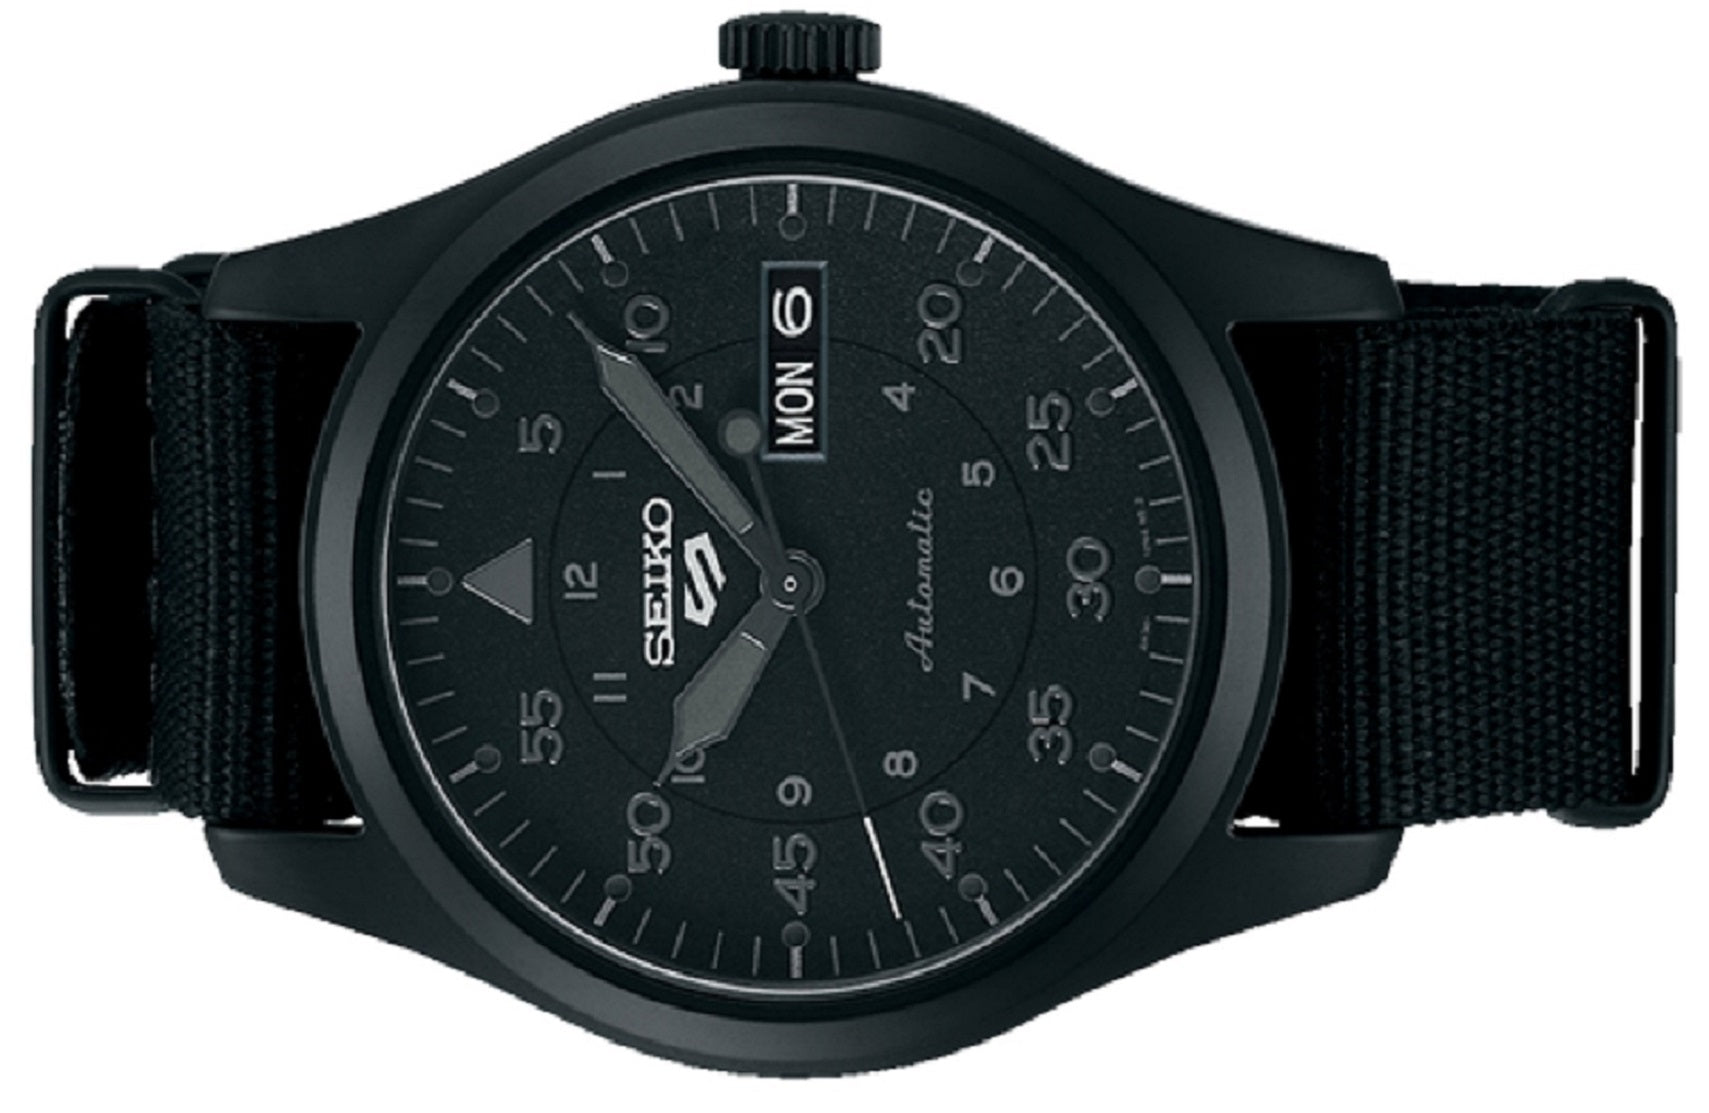 Seiko 5 SRPJ11K1 Sports Automatic Watch Nylon Strap for Men-Watch Portal Philippines